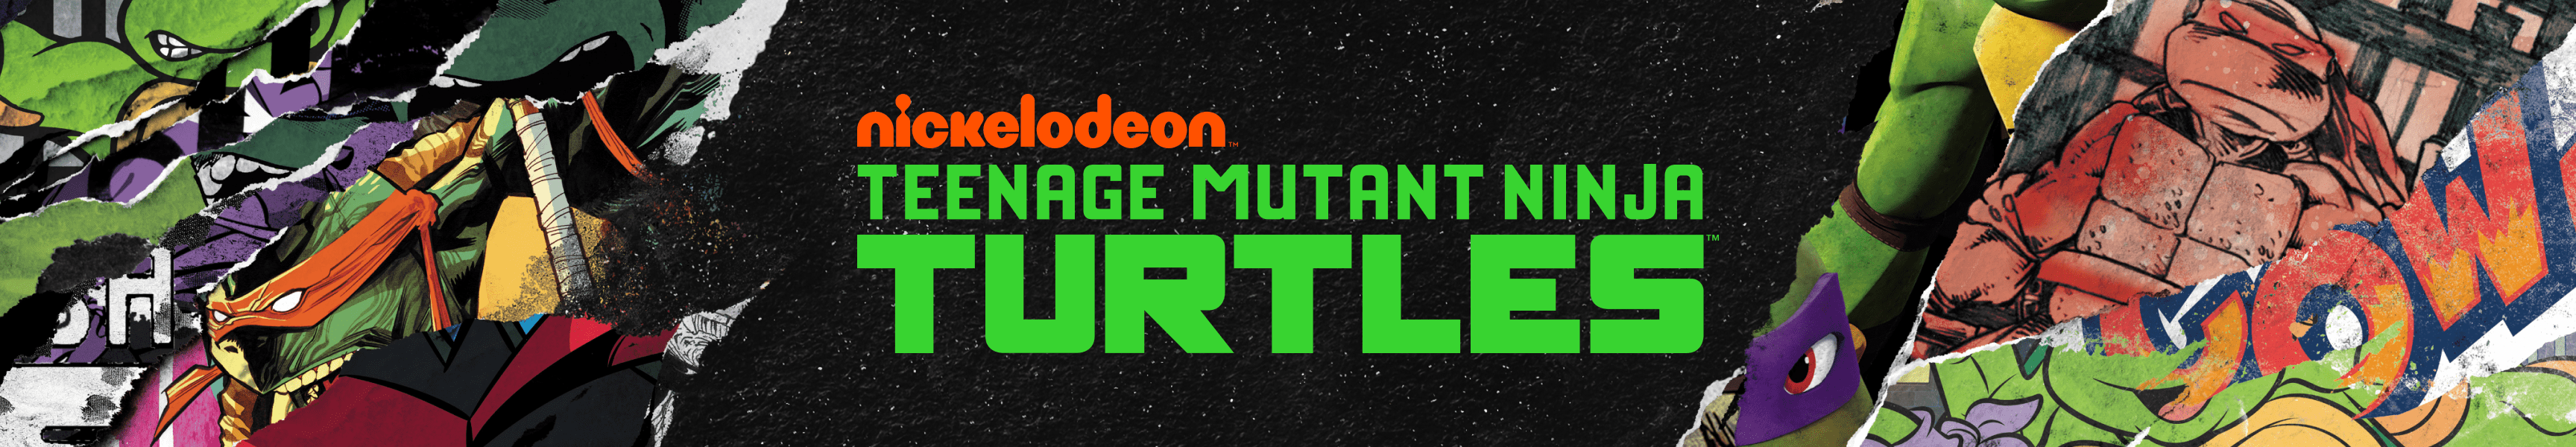 Teenage Mutant Ninja Turtles Bouteilles d'eau